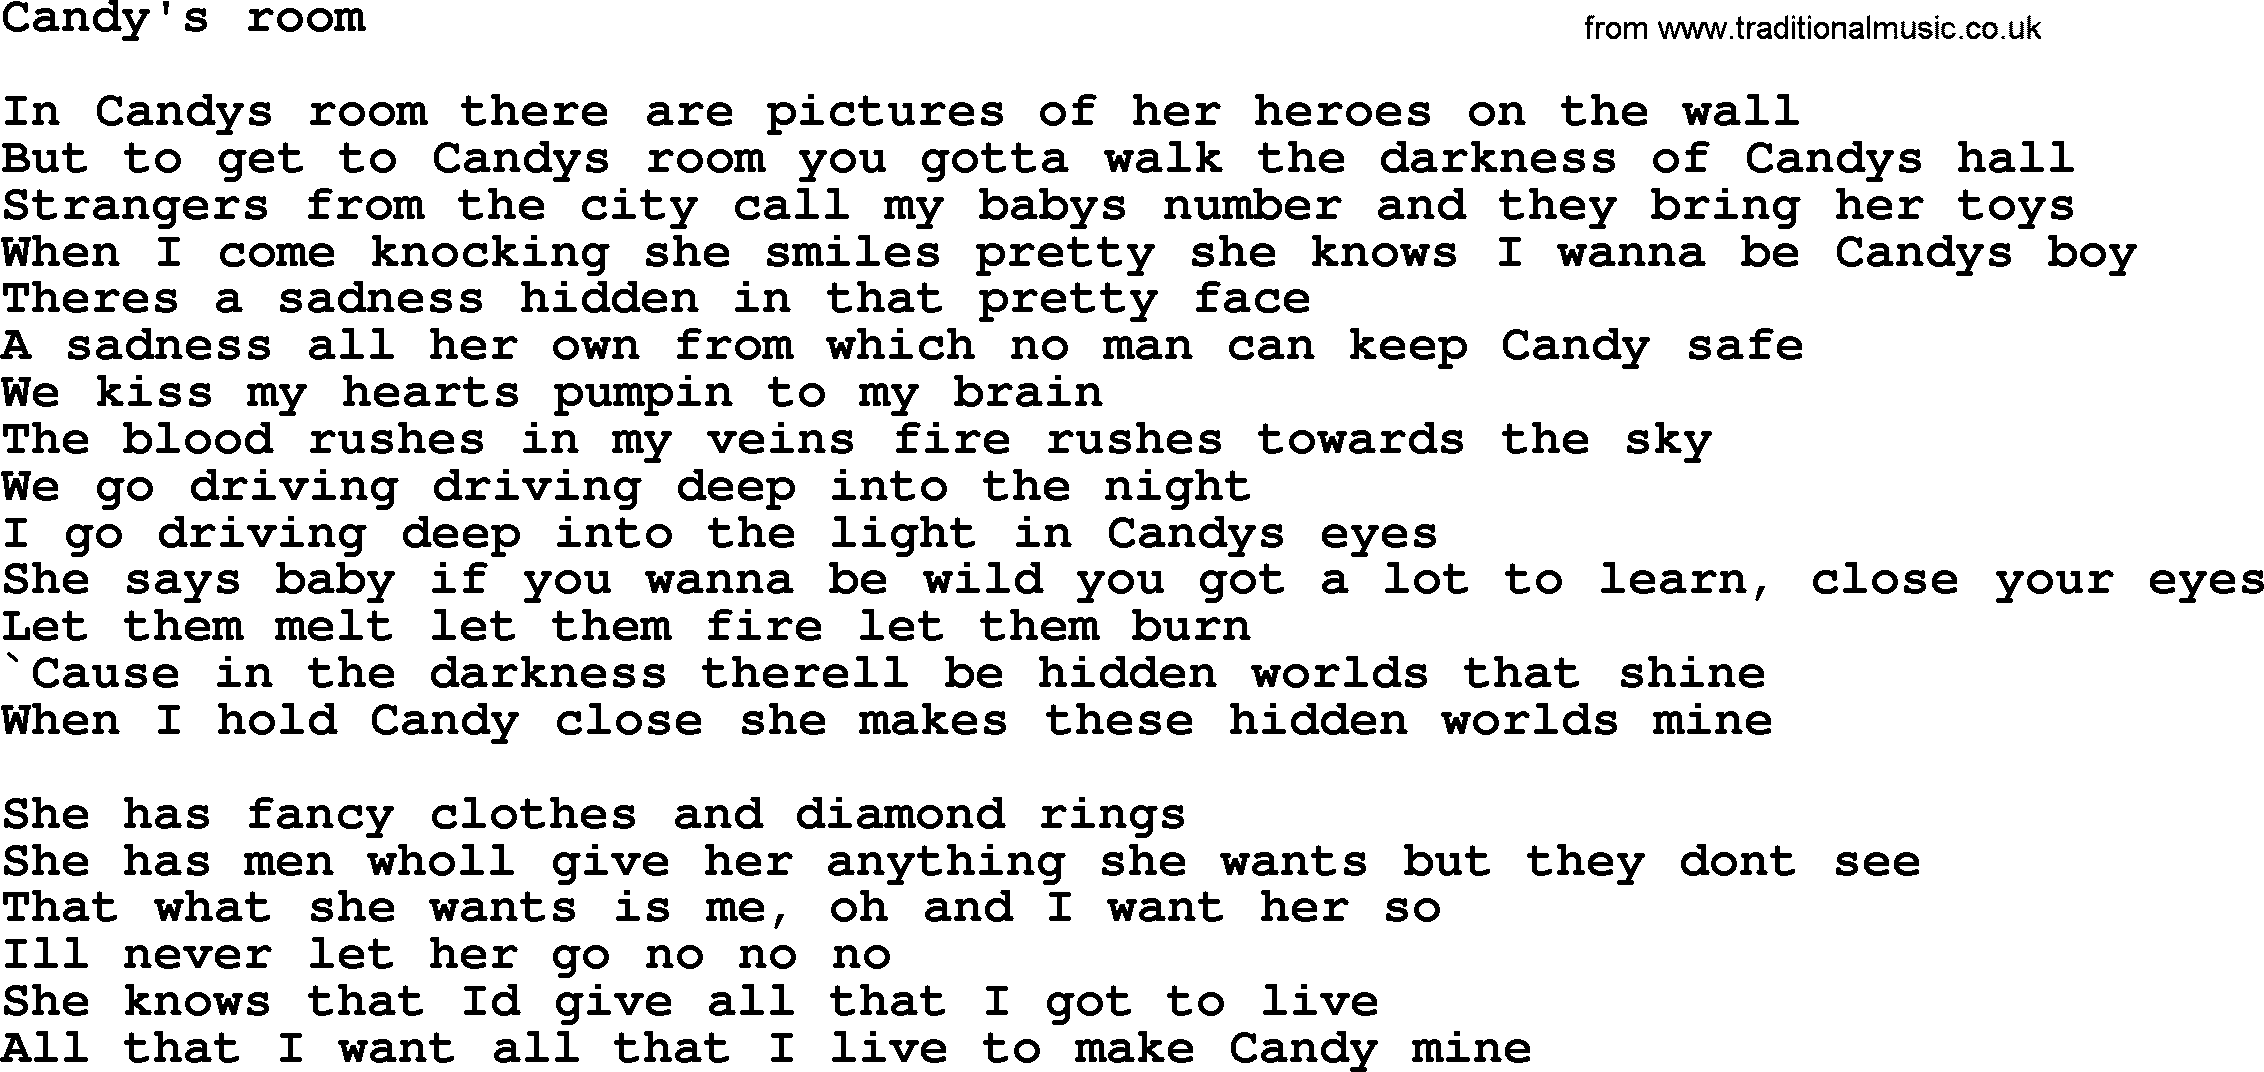 Bruce Springsteen song: Candy's Room lyrics